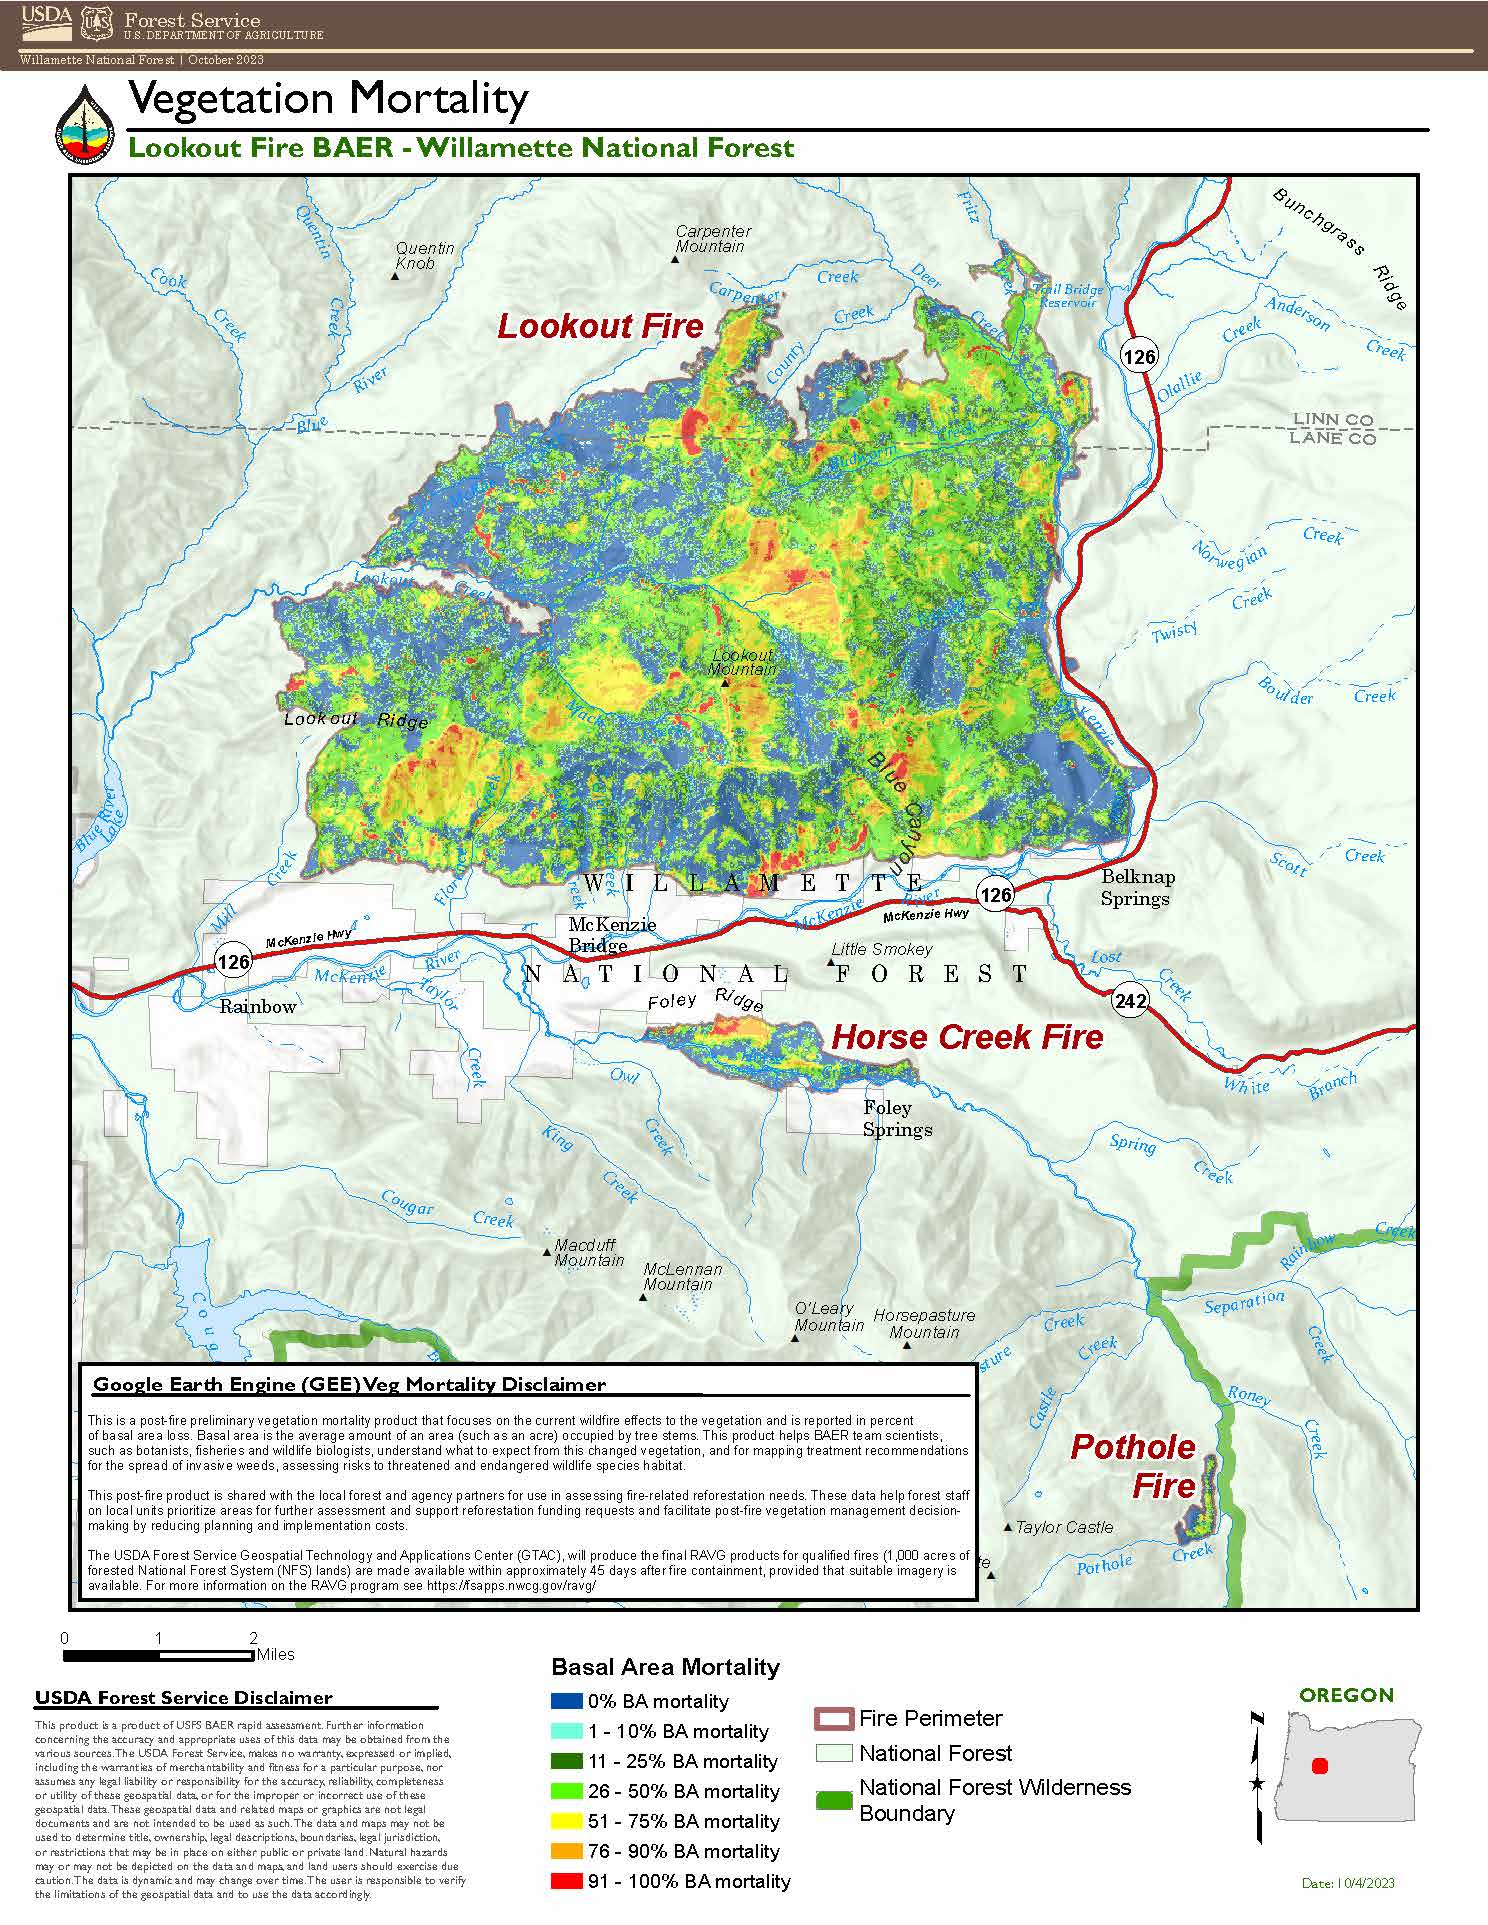 

						Vegetation Mortality Map Lookout Fire
			